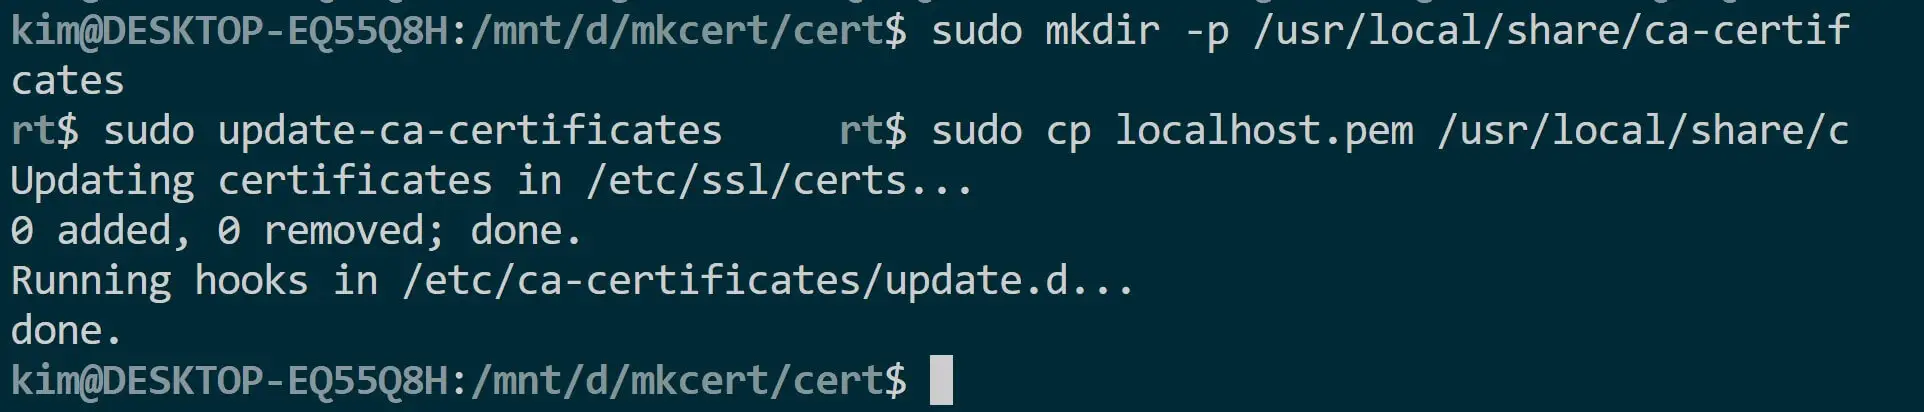 Install Mkcert on Windows|Linux|Ubuntu with Localhost SSL HTTPS Certificates